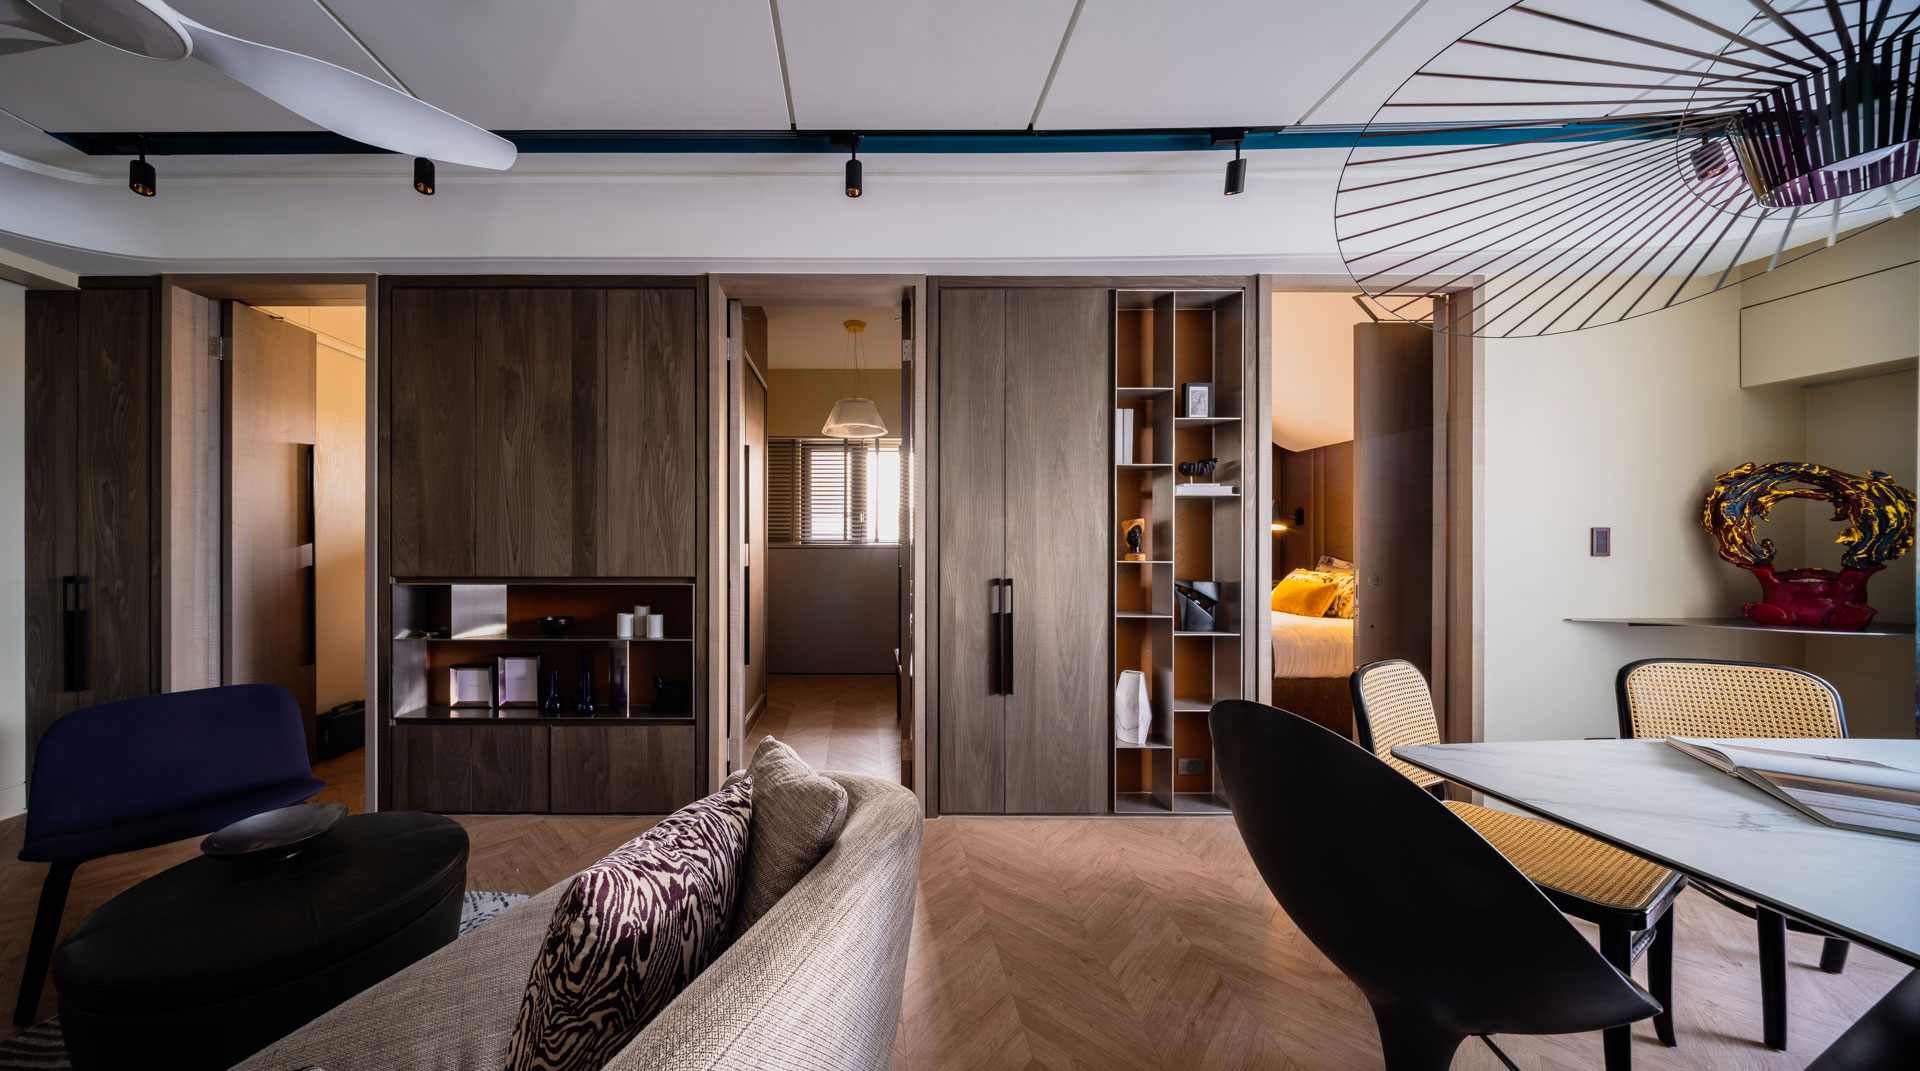 Inspace Interior Design Transformed A Fun-Size Home Into A Yacht!